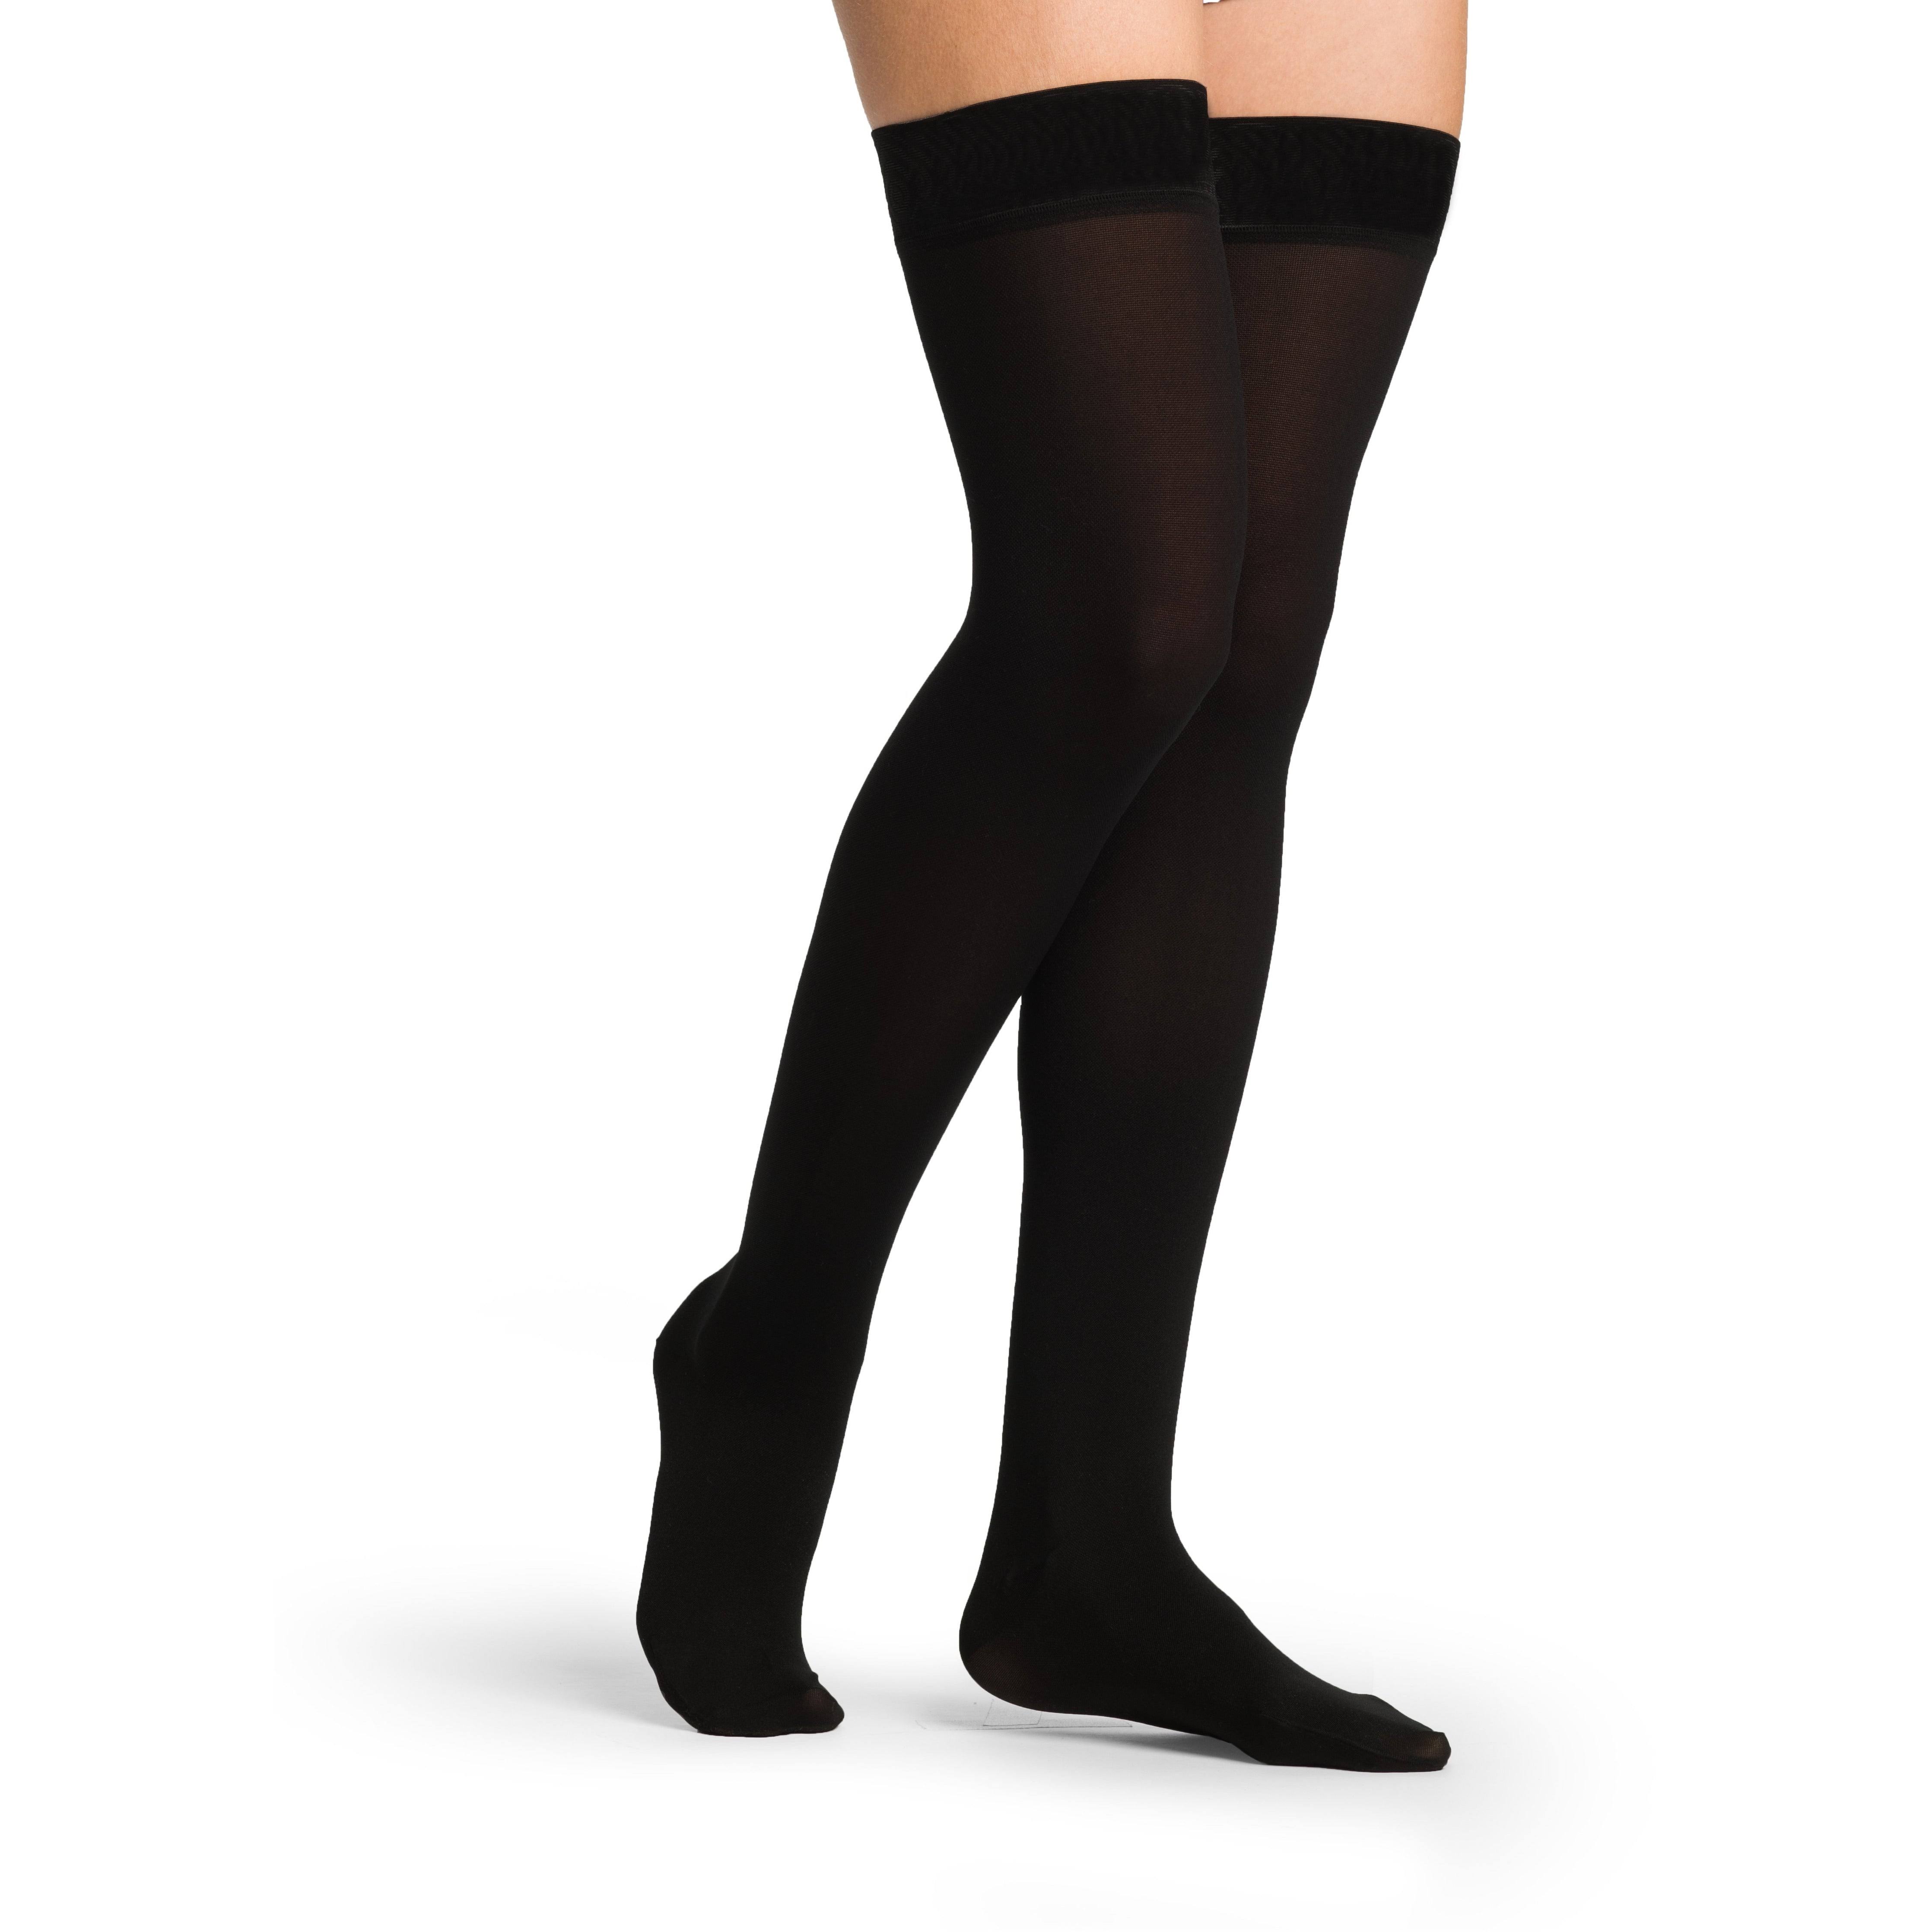 Sigvaris Women's Select Comfort Thigh - Black, Small Long